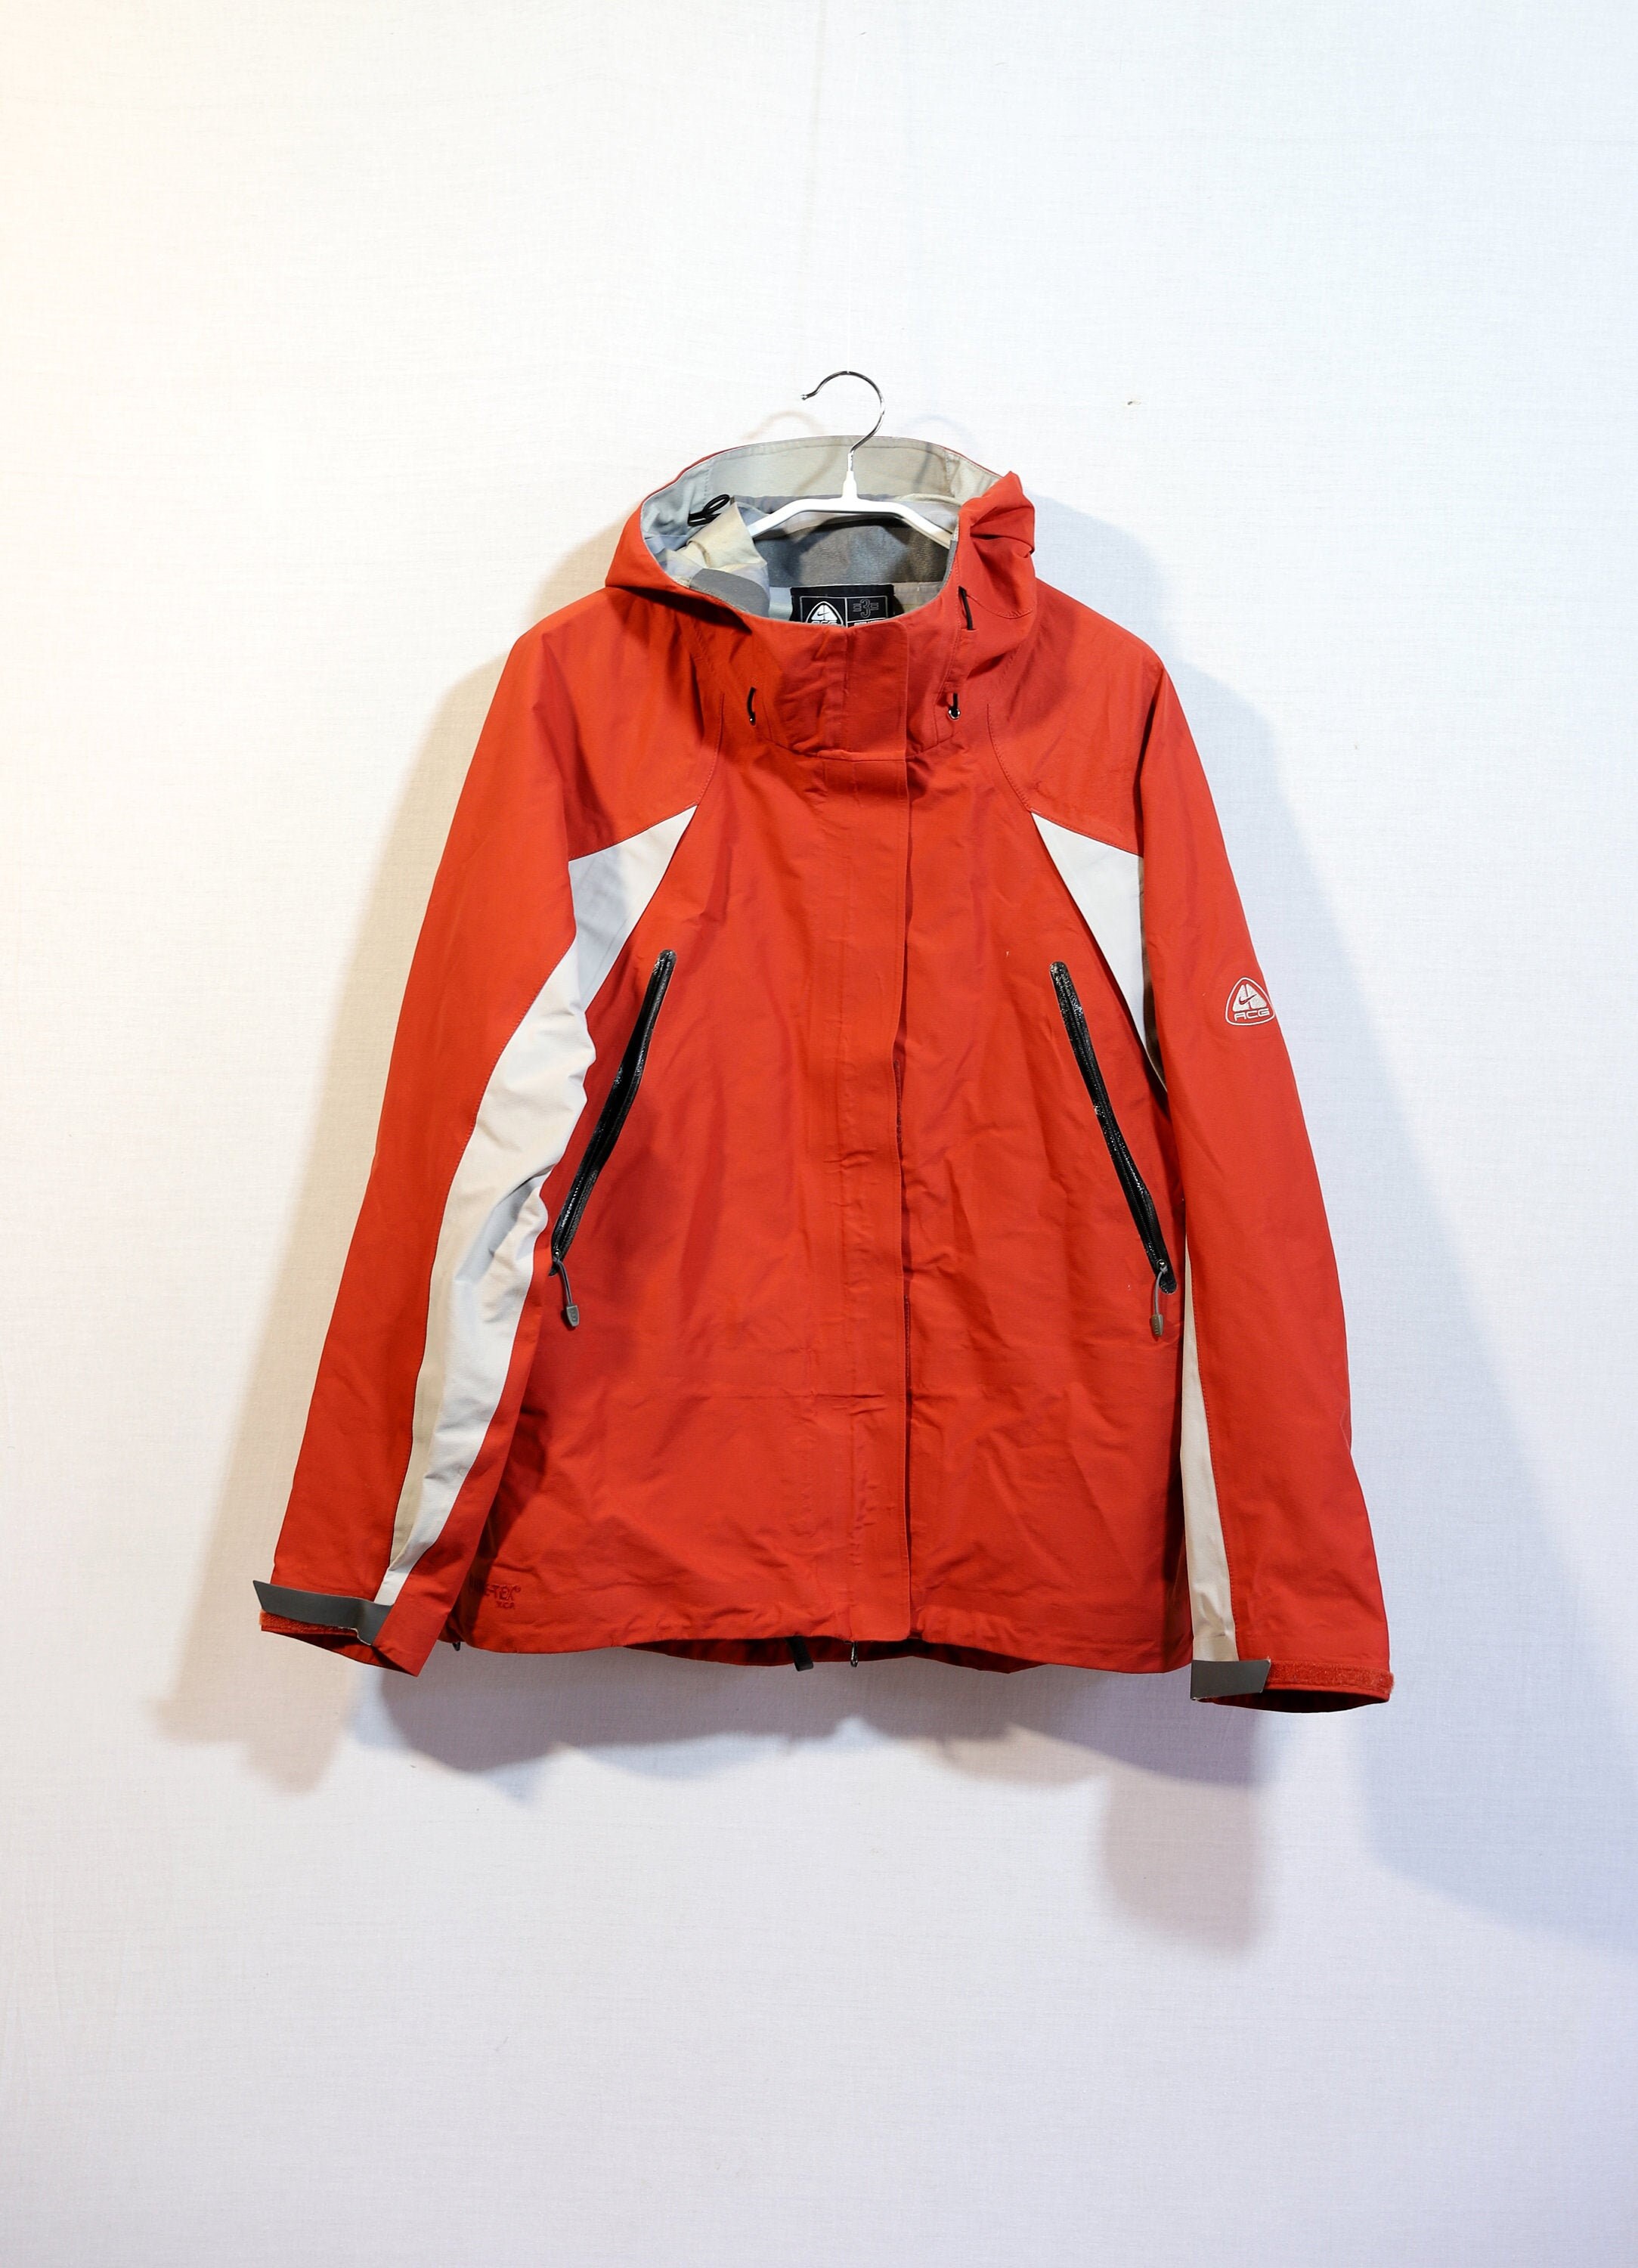 Nike Jacket Mens Red Skiing Jacket Zipper Winter Outerwear - Etsy